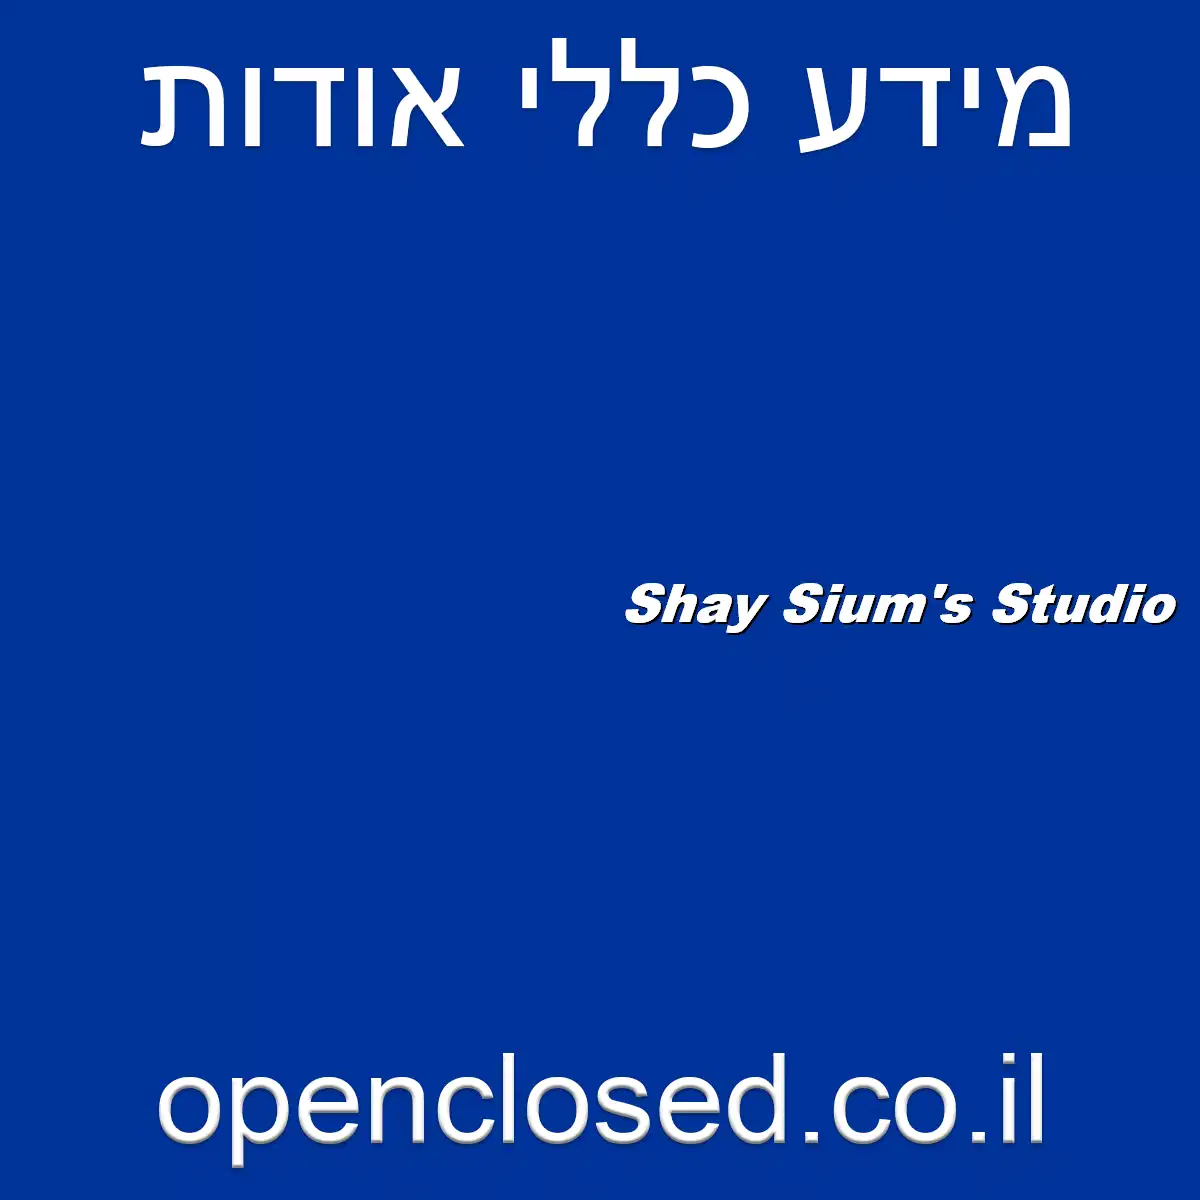 Shay Sium’s Studio